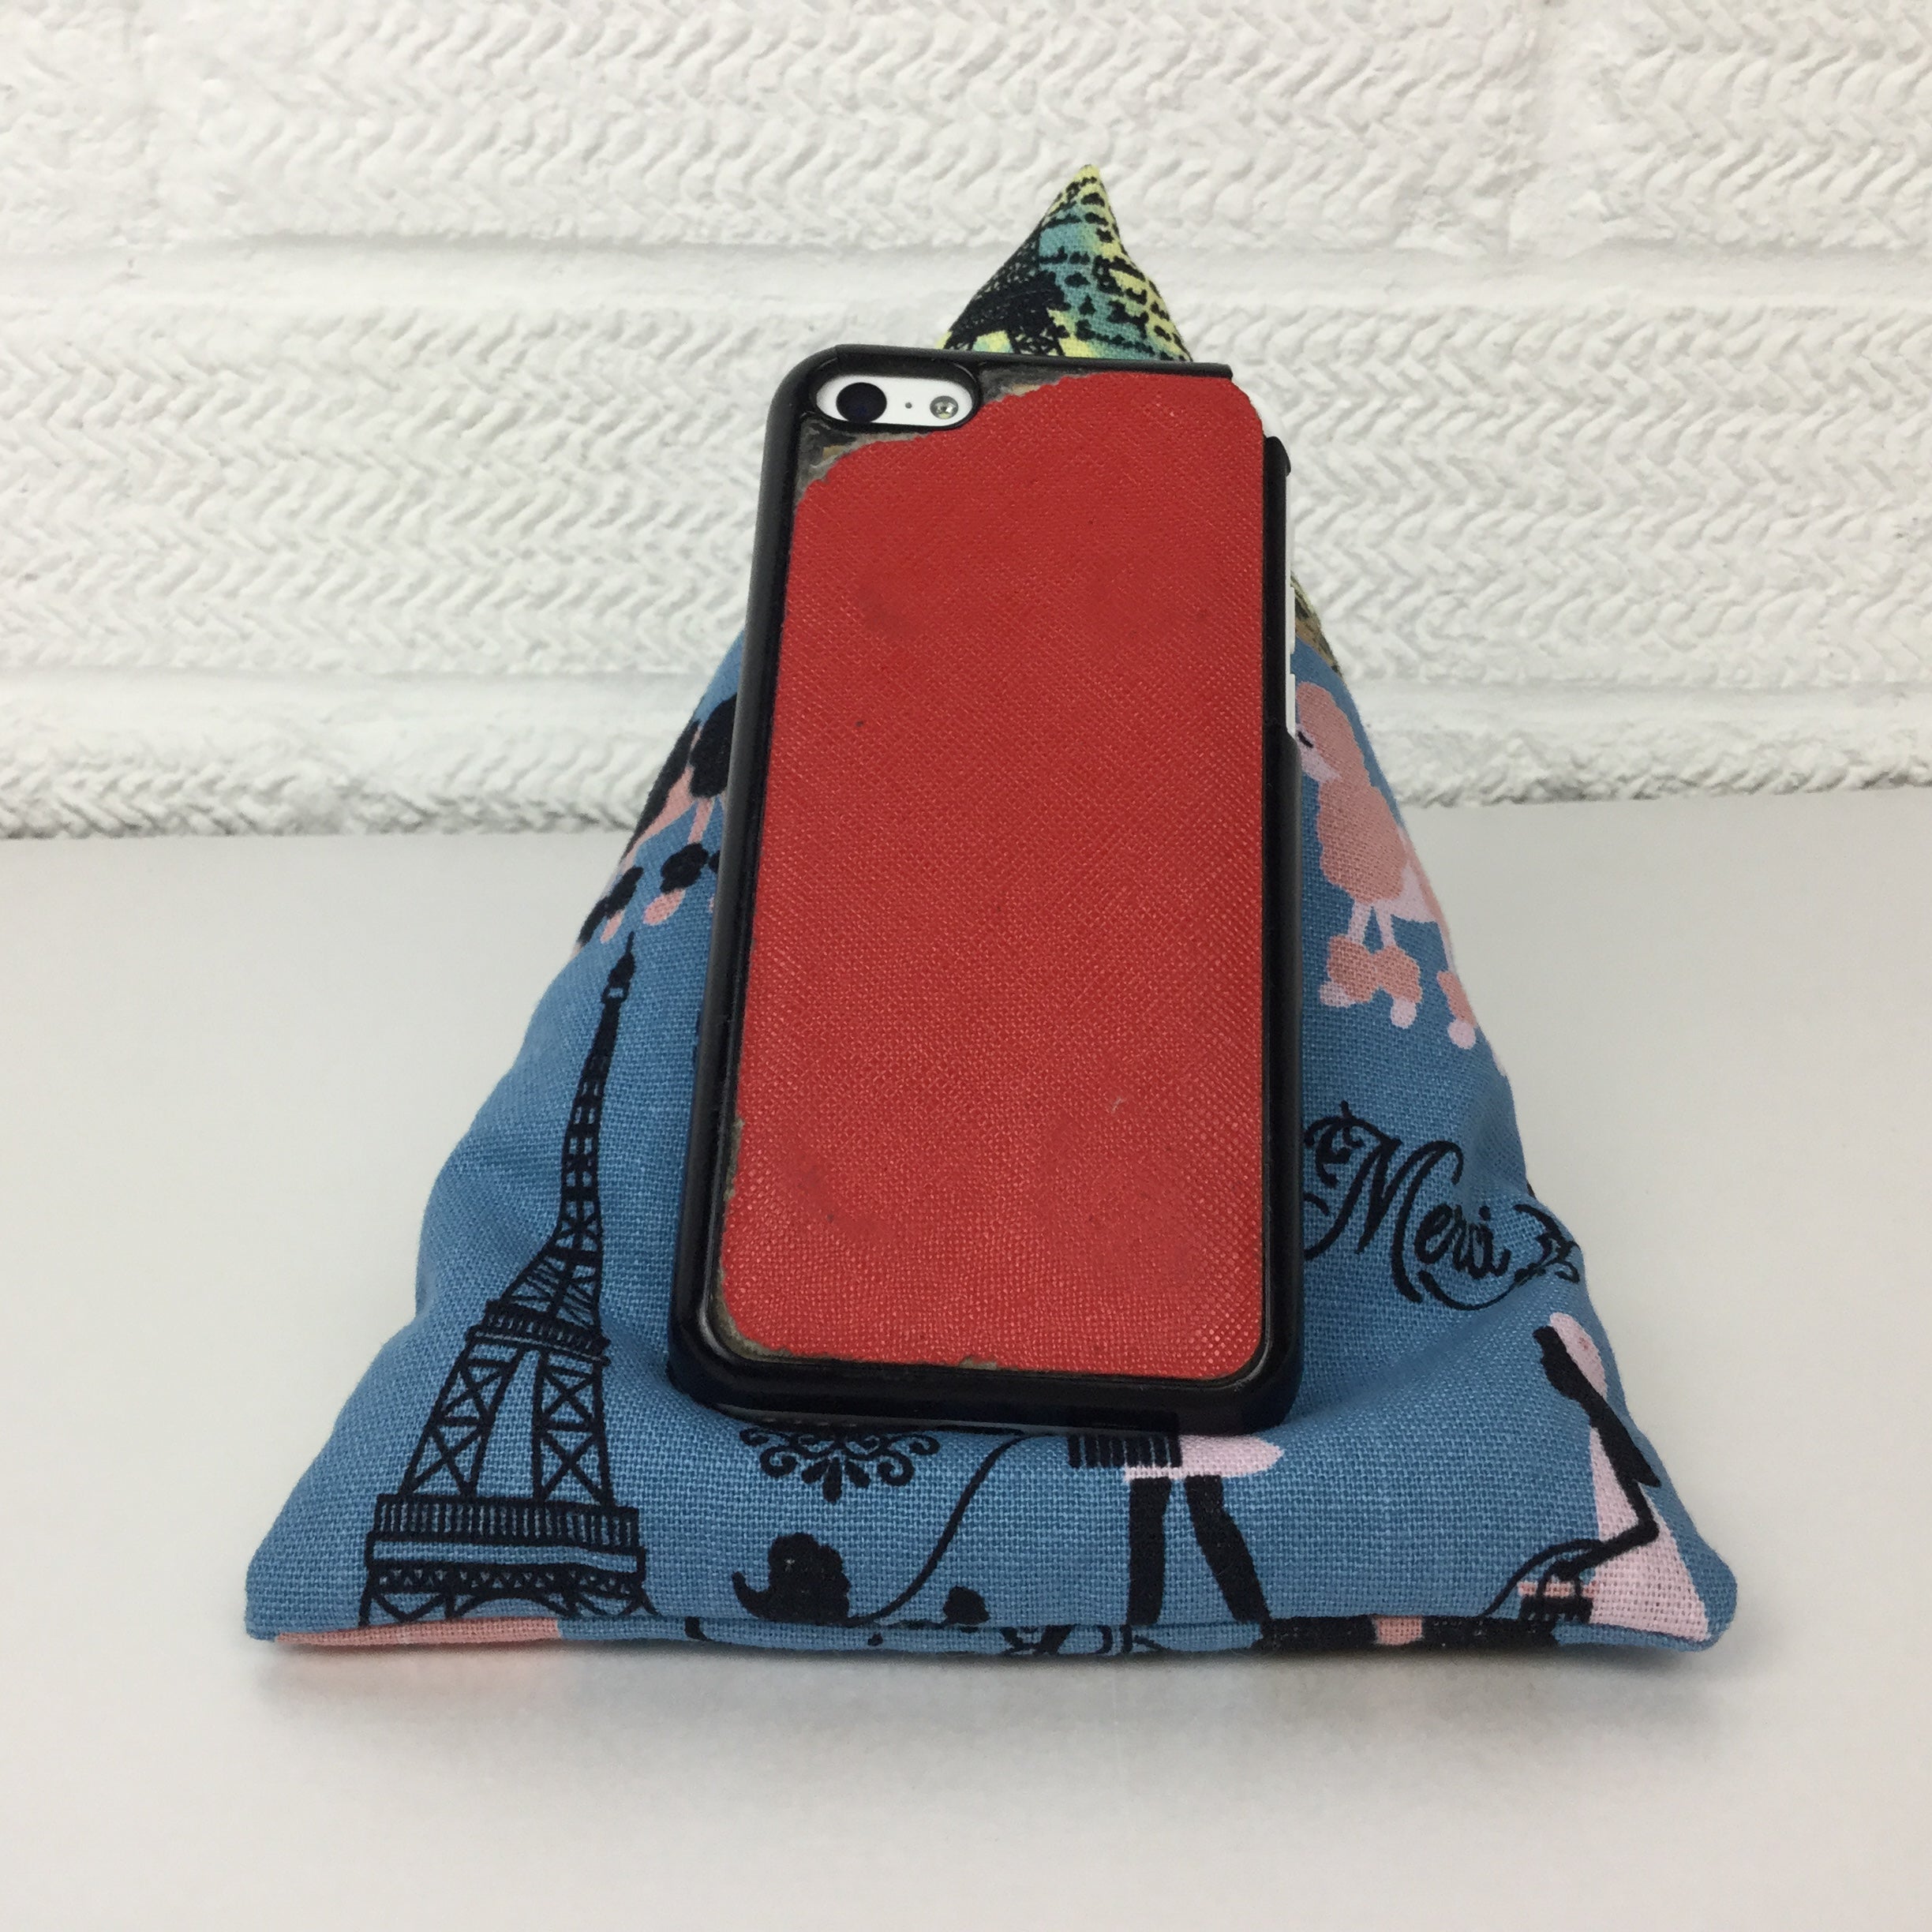 bean bag iphone or smart phone holder in blue paris canvas fabric